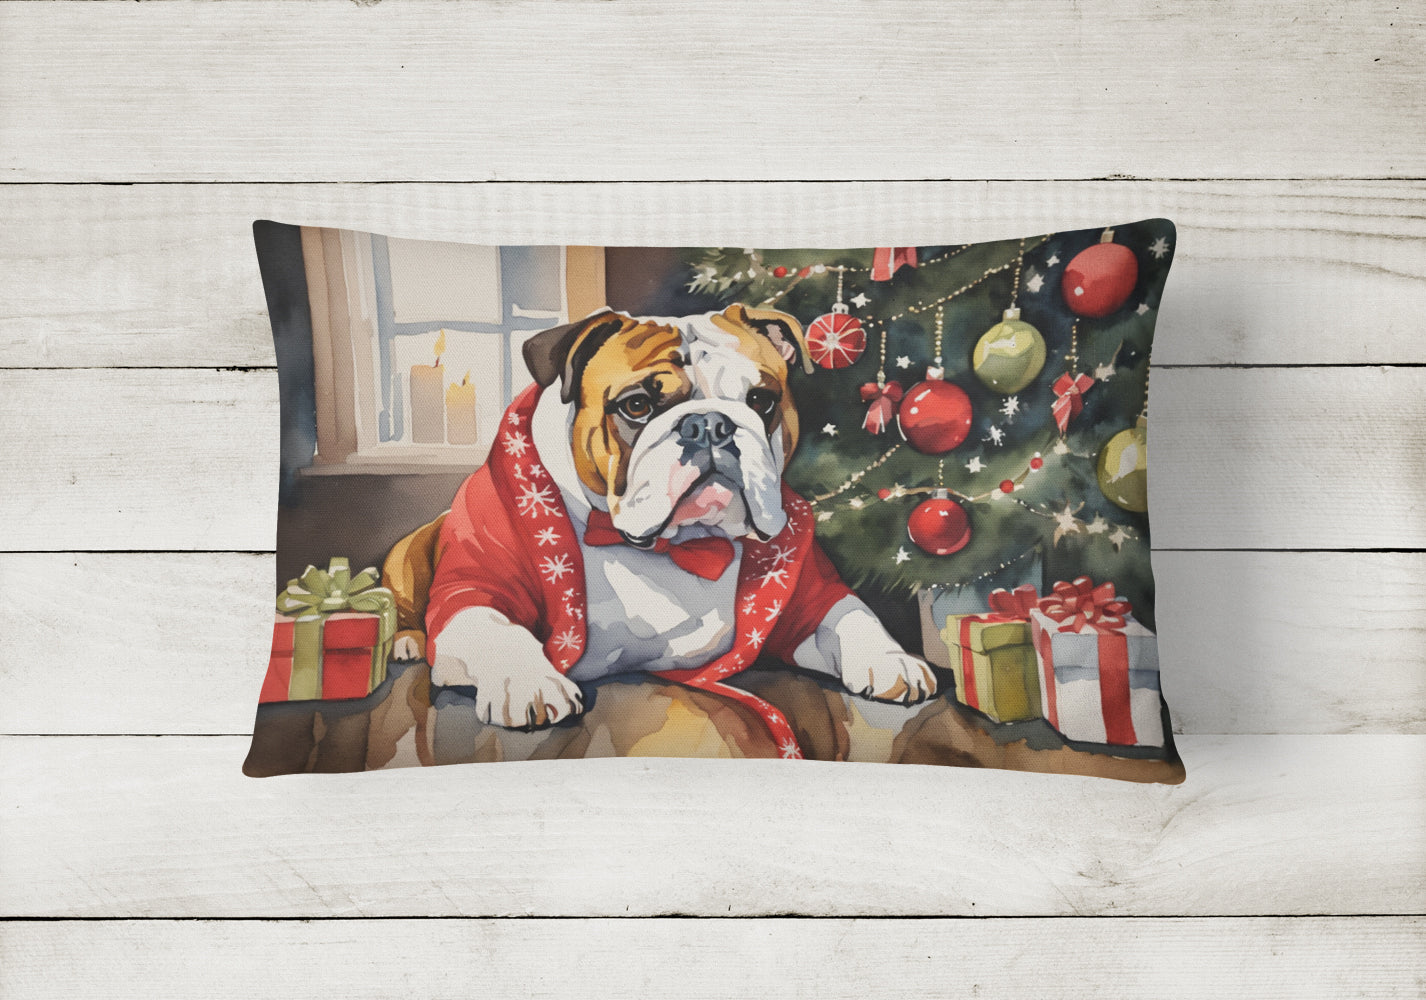 Buy this English Bulldog Cozy Christmas Throw Pillow